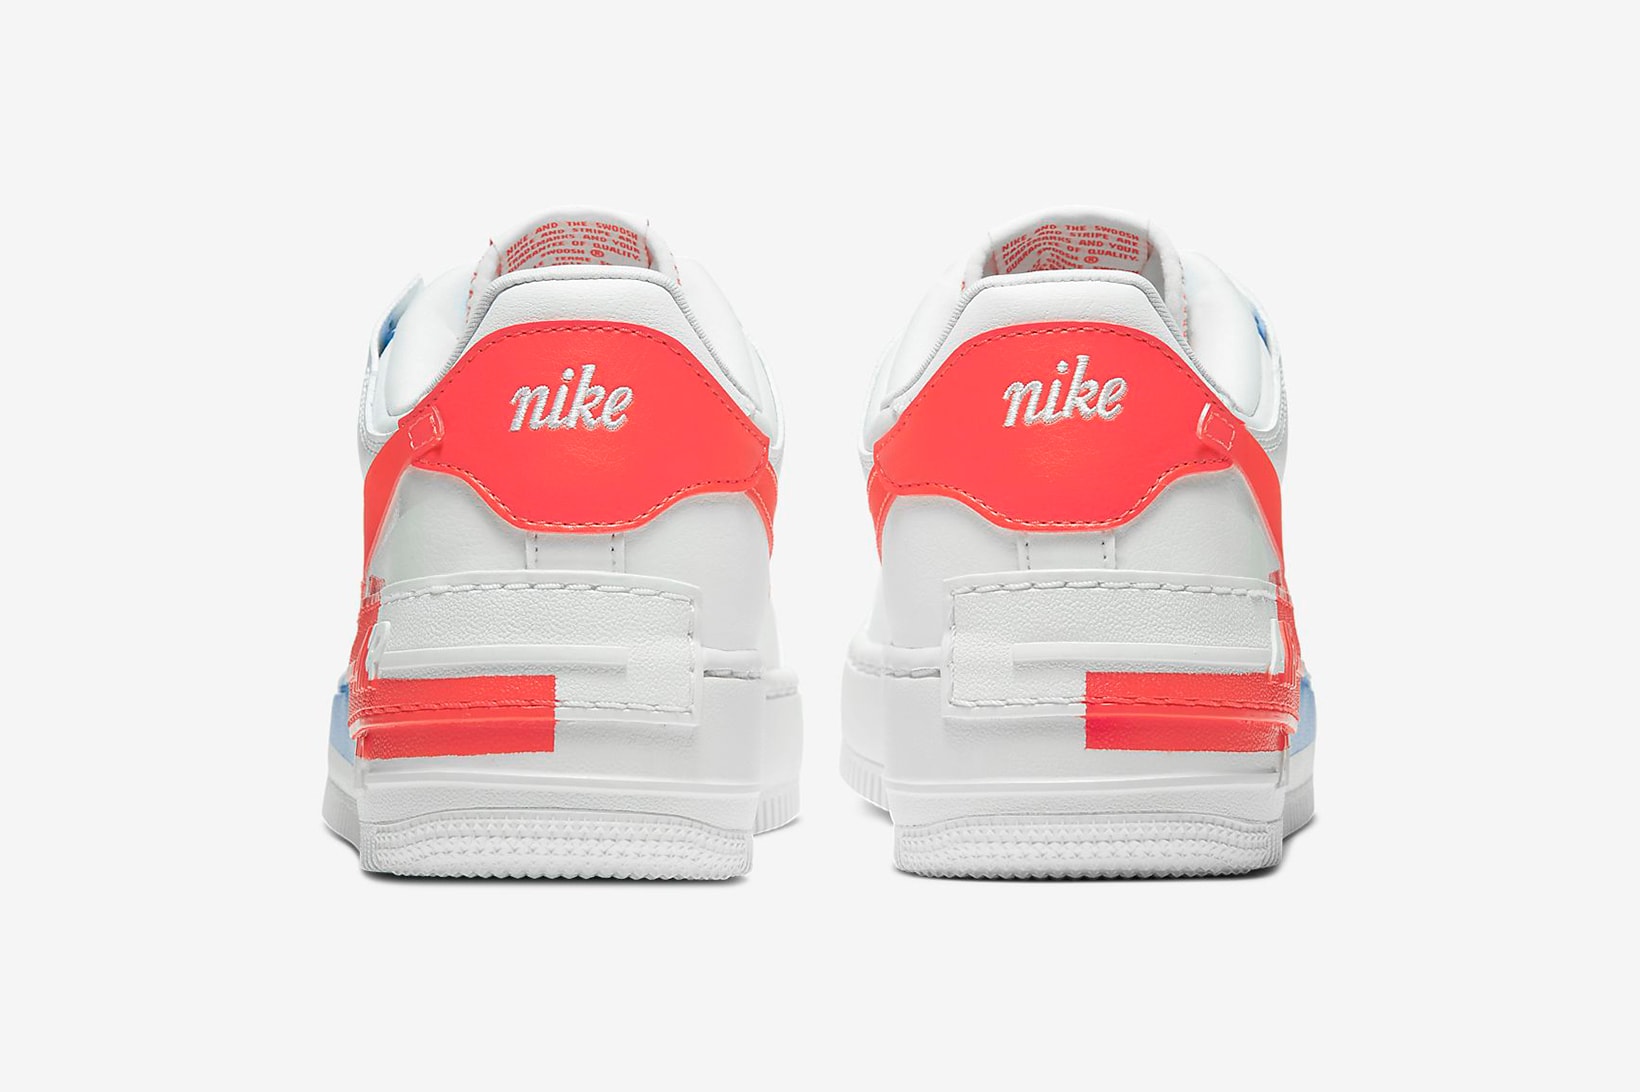 nike air force 1 shadow se womens sneakers white neon orange blue sneakerhead footwear shoes